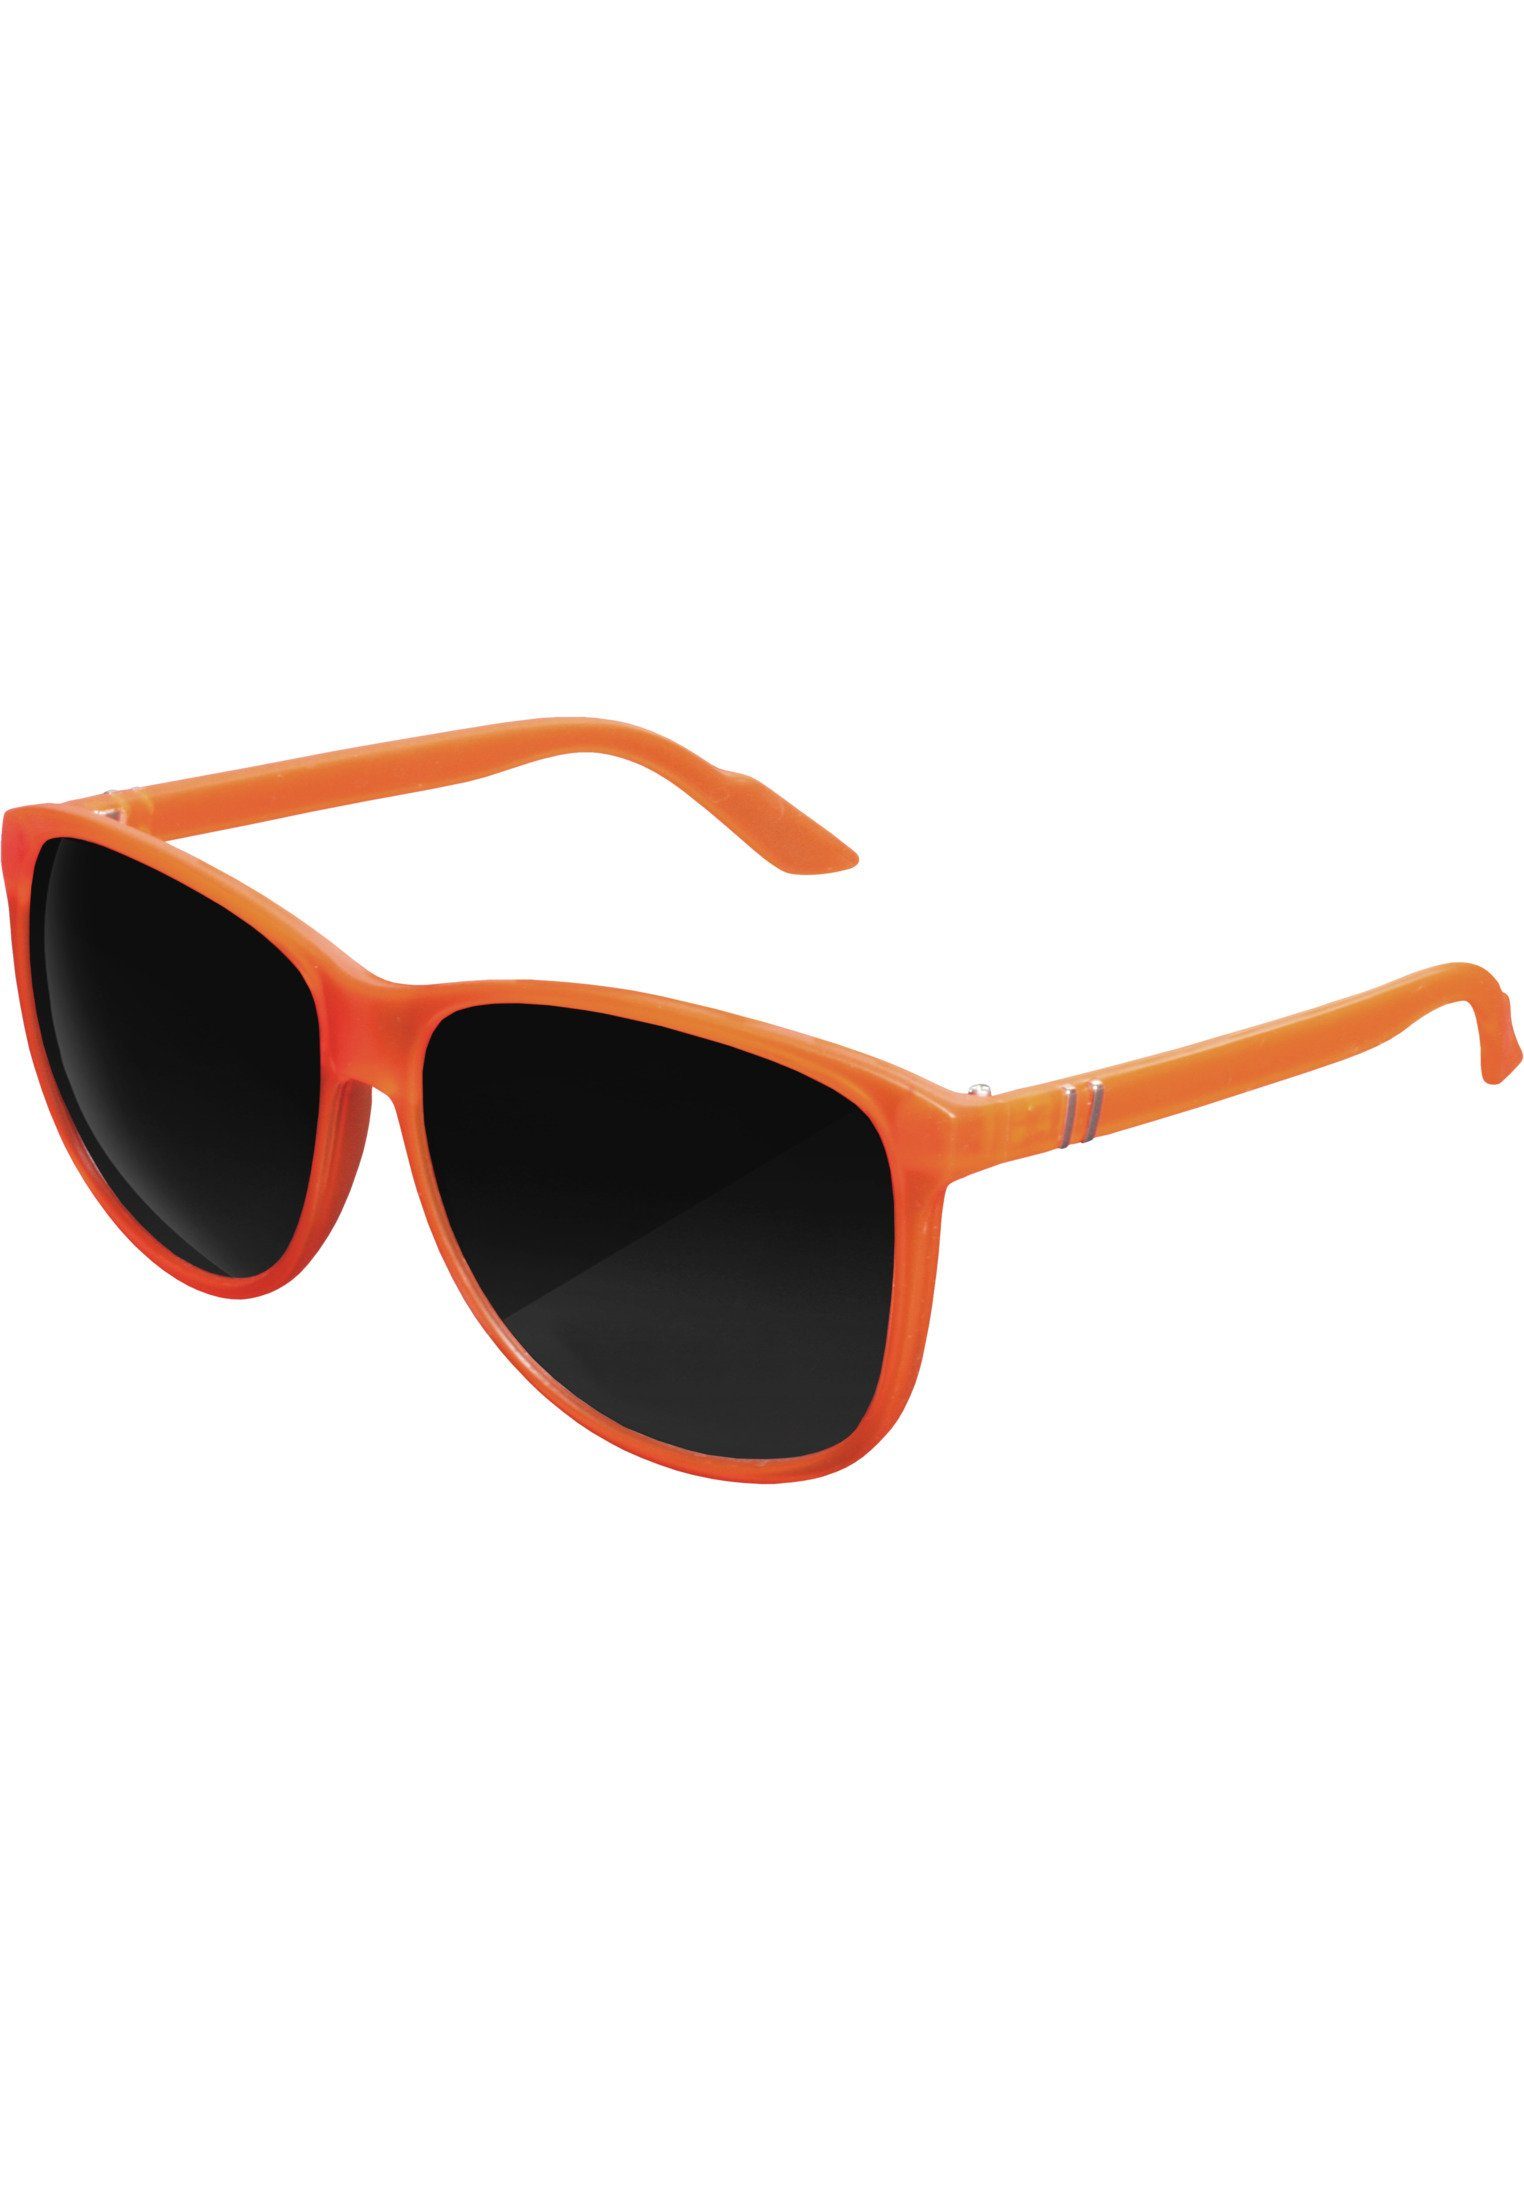 MSTRDS Sonnenbrille Accessoires Sunglasses Chirwa neonorange | Sonnenbrillen